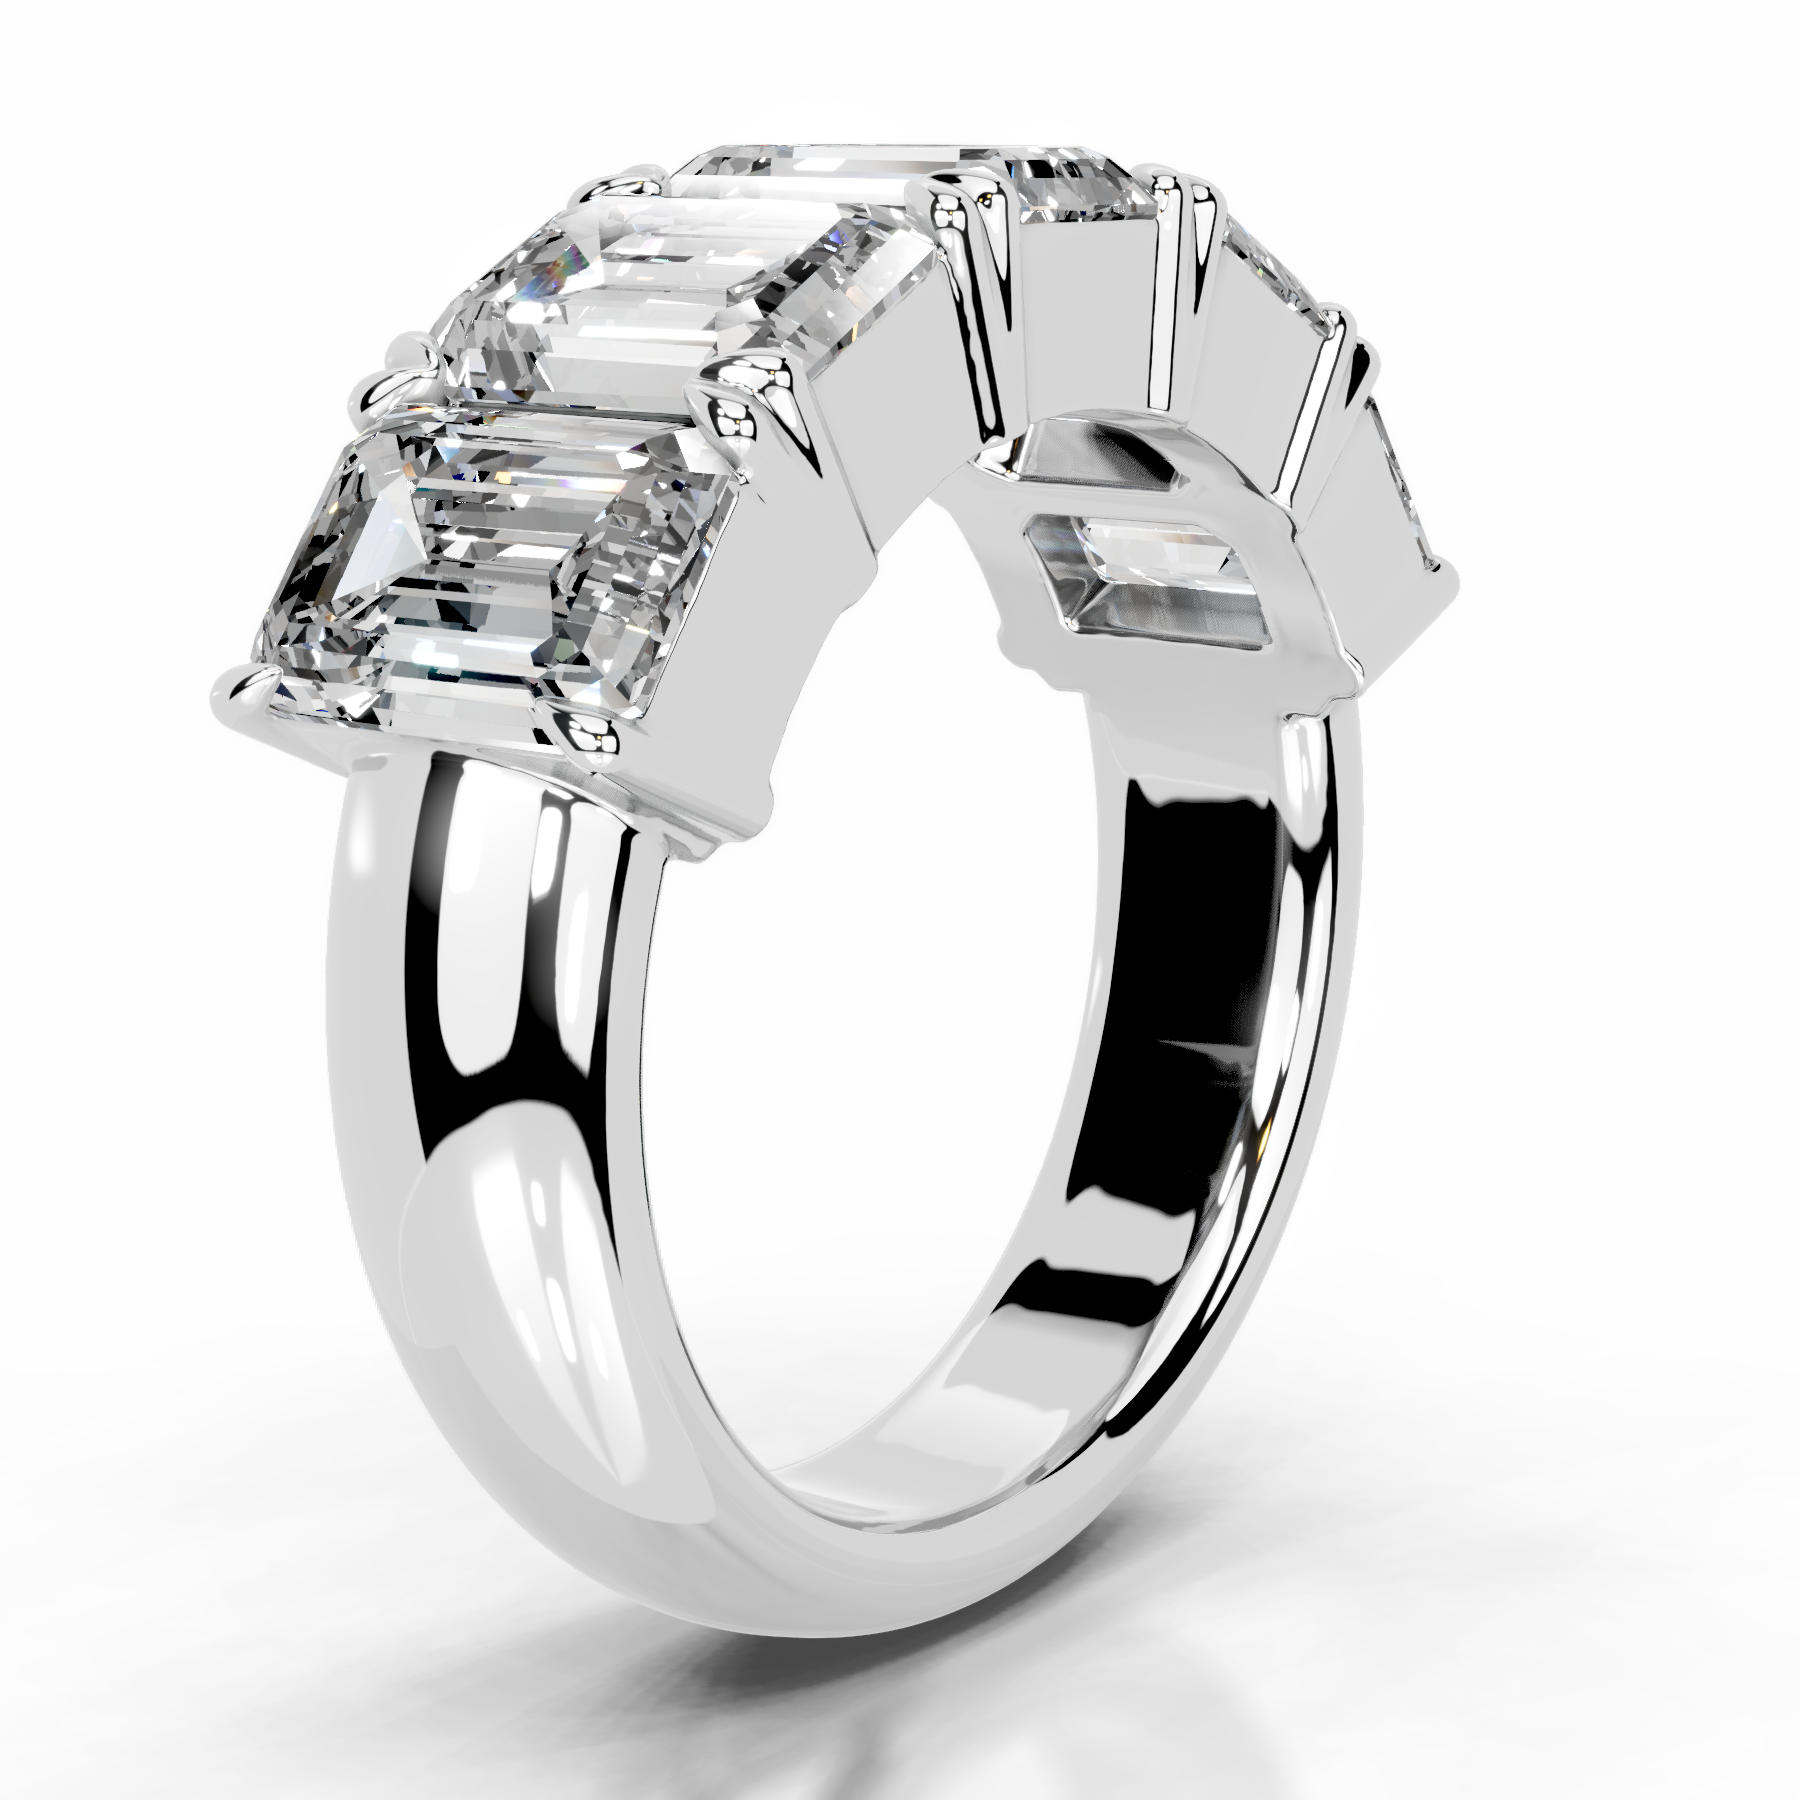 Shandra Diamond Wedding Ring   (2.5 Carat) -14K White Gold